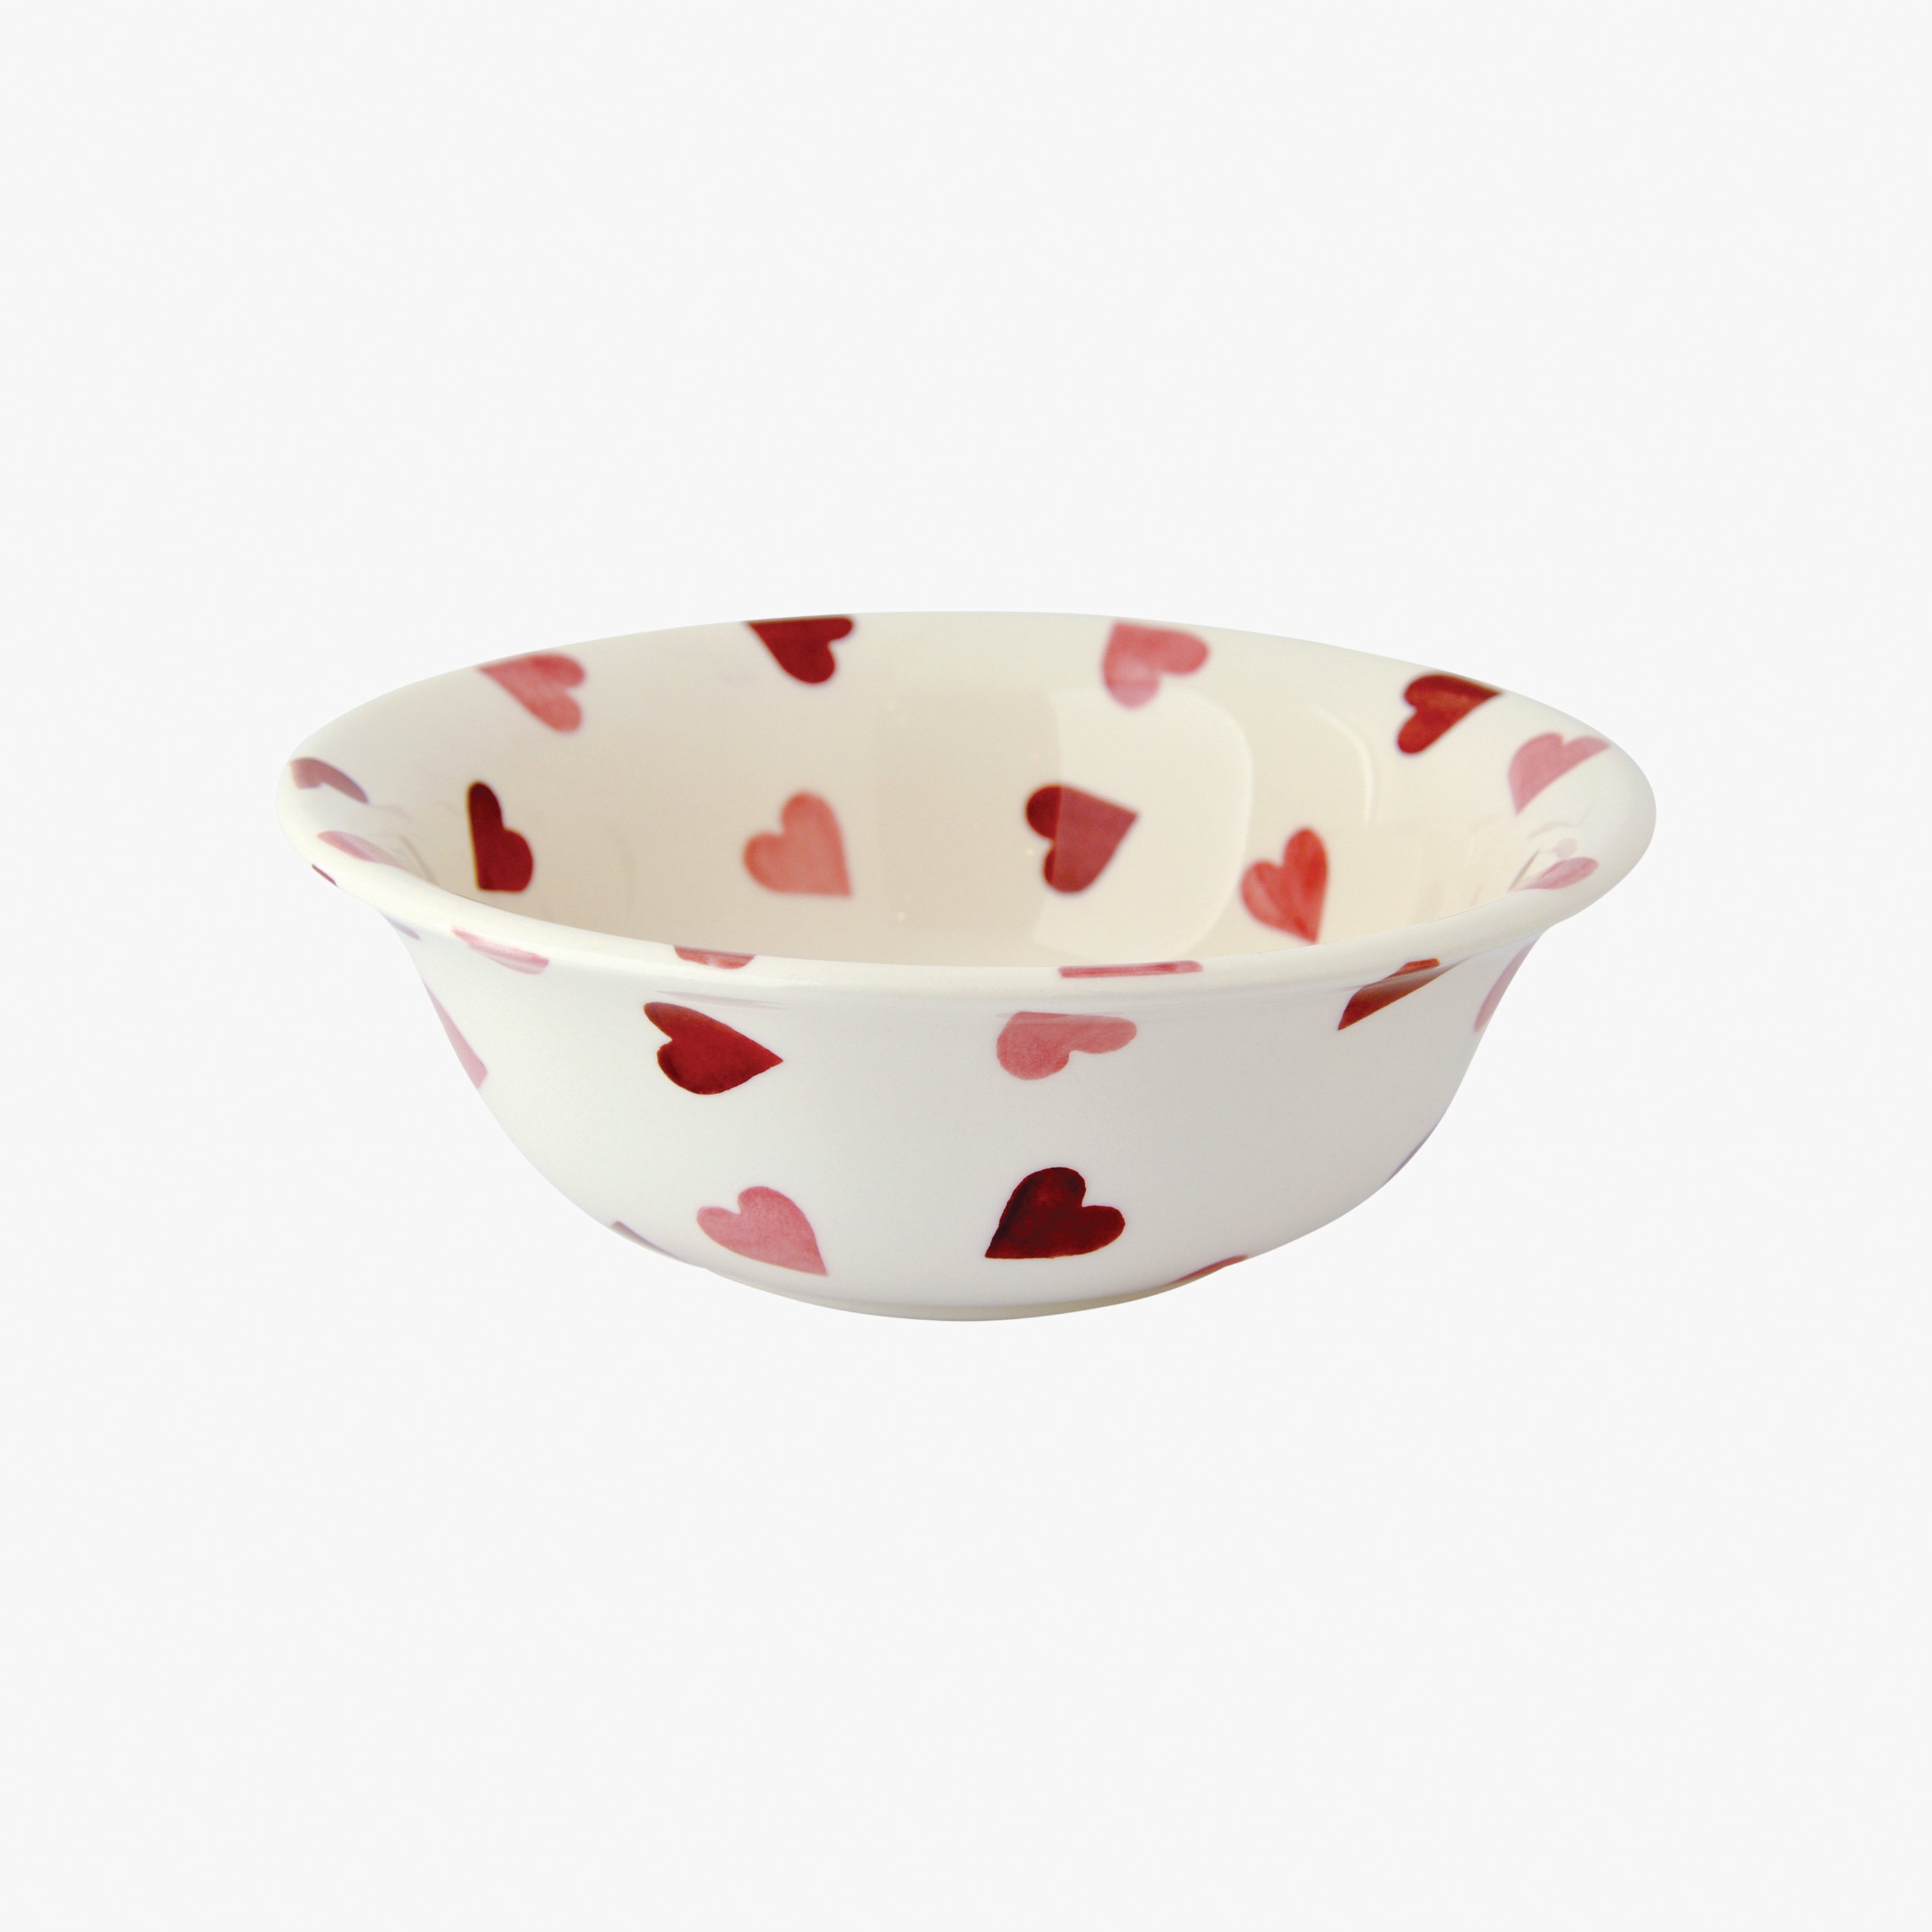 Emma Bridgewater |  Pink Hearts Cereal Bowl - Unique Handmade & Handpainted English Earthenware Deco